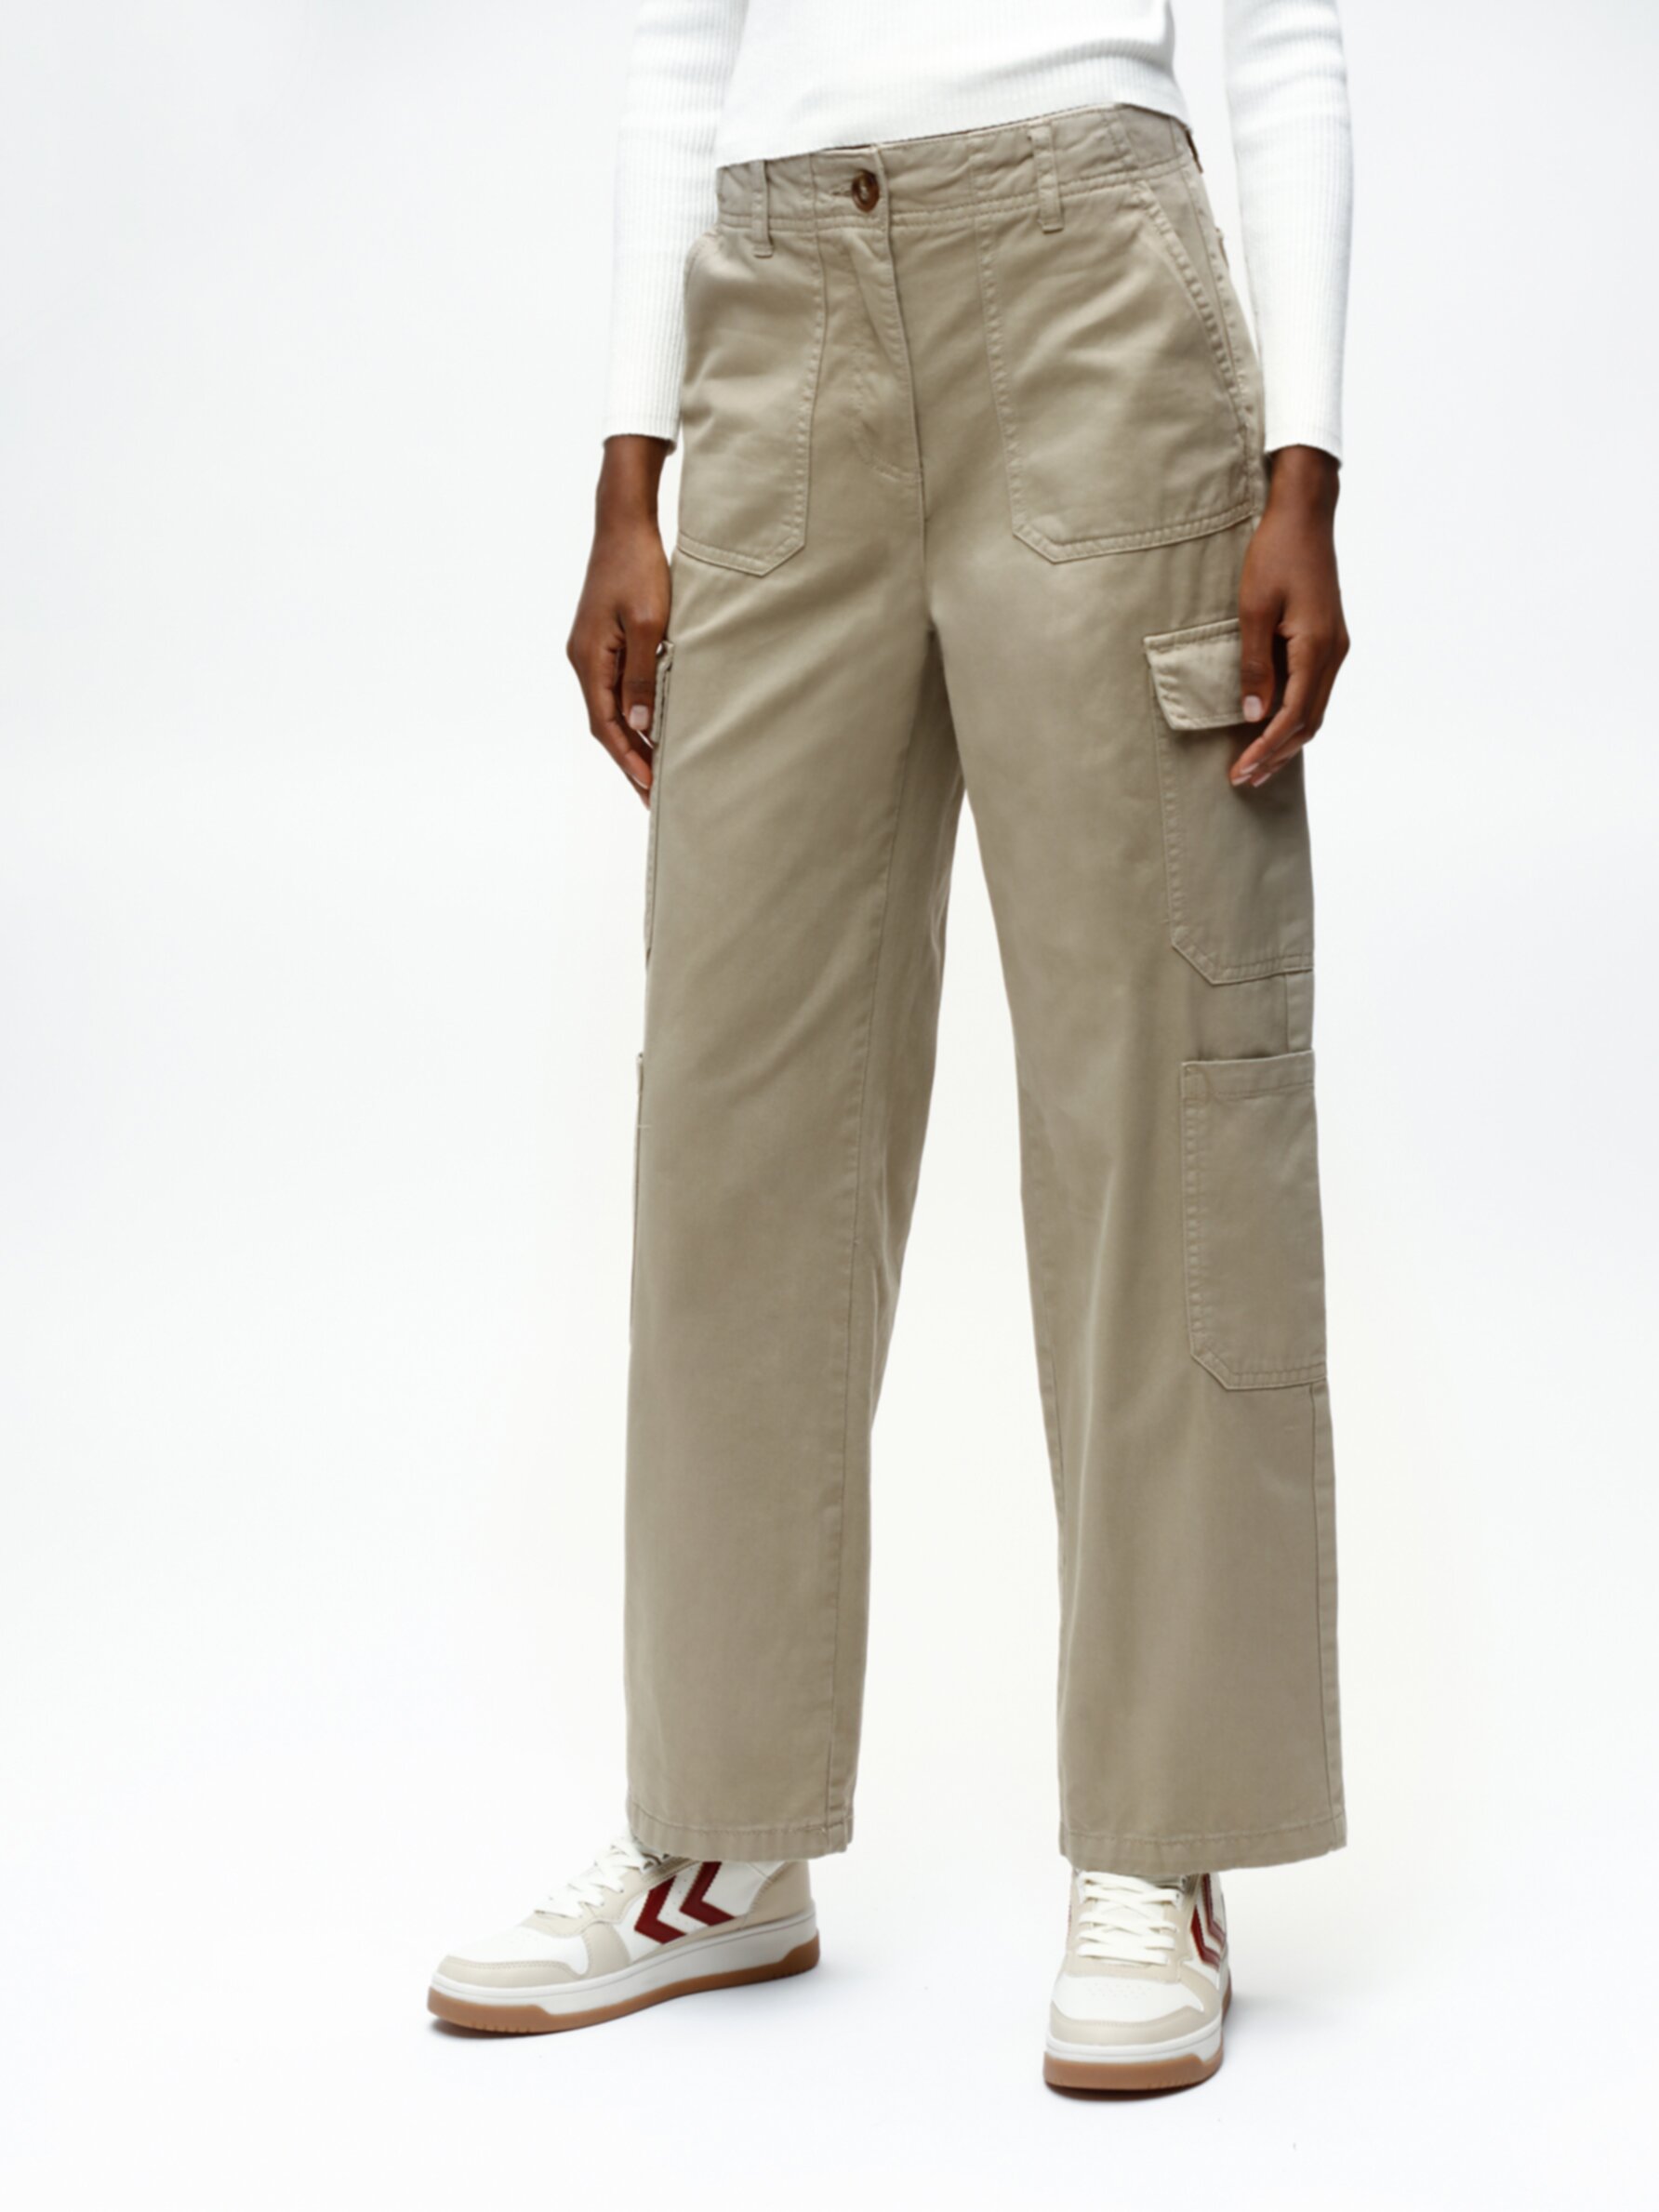 Cargo trousers - SALE - Woman -  Lefties UAE - Dubai/Sharjah